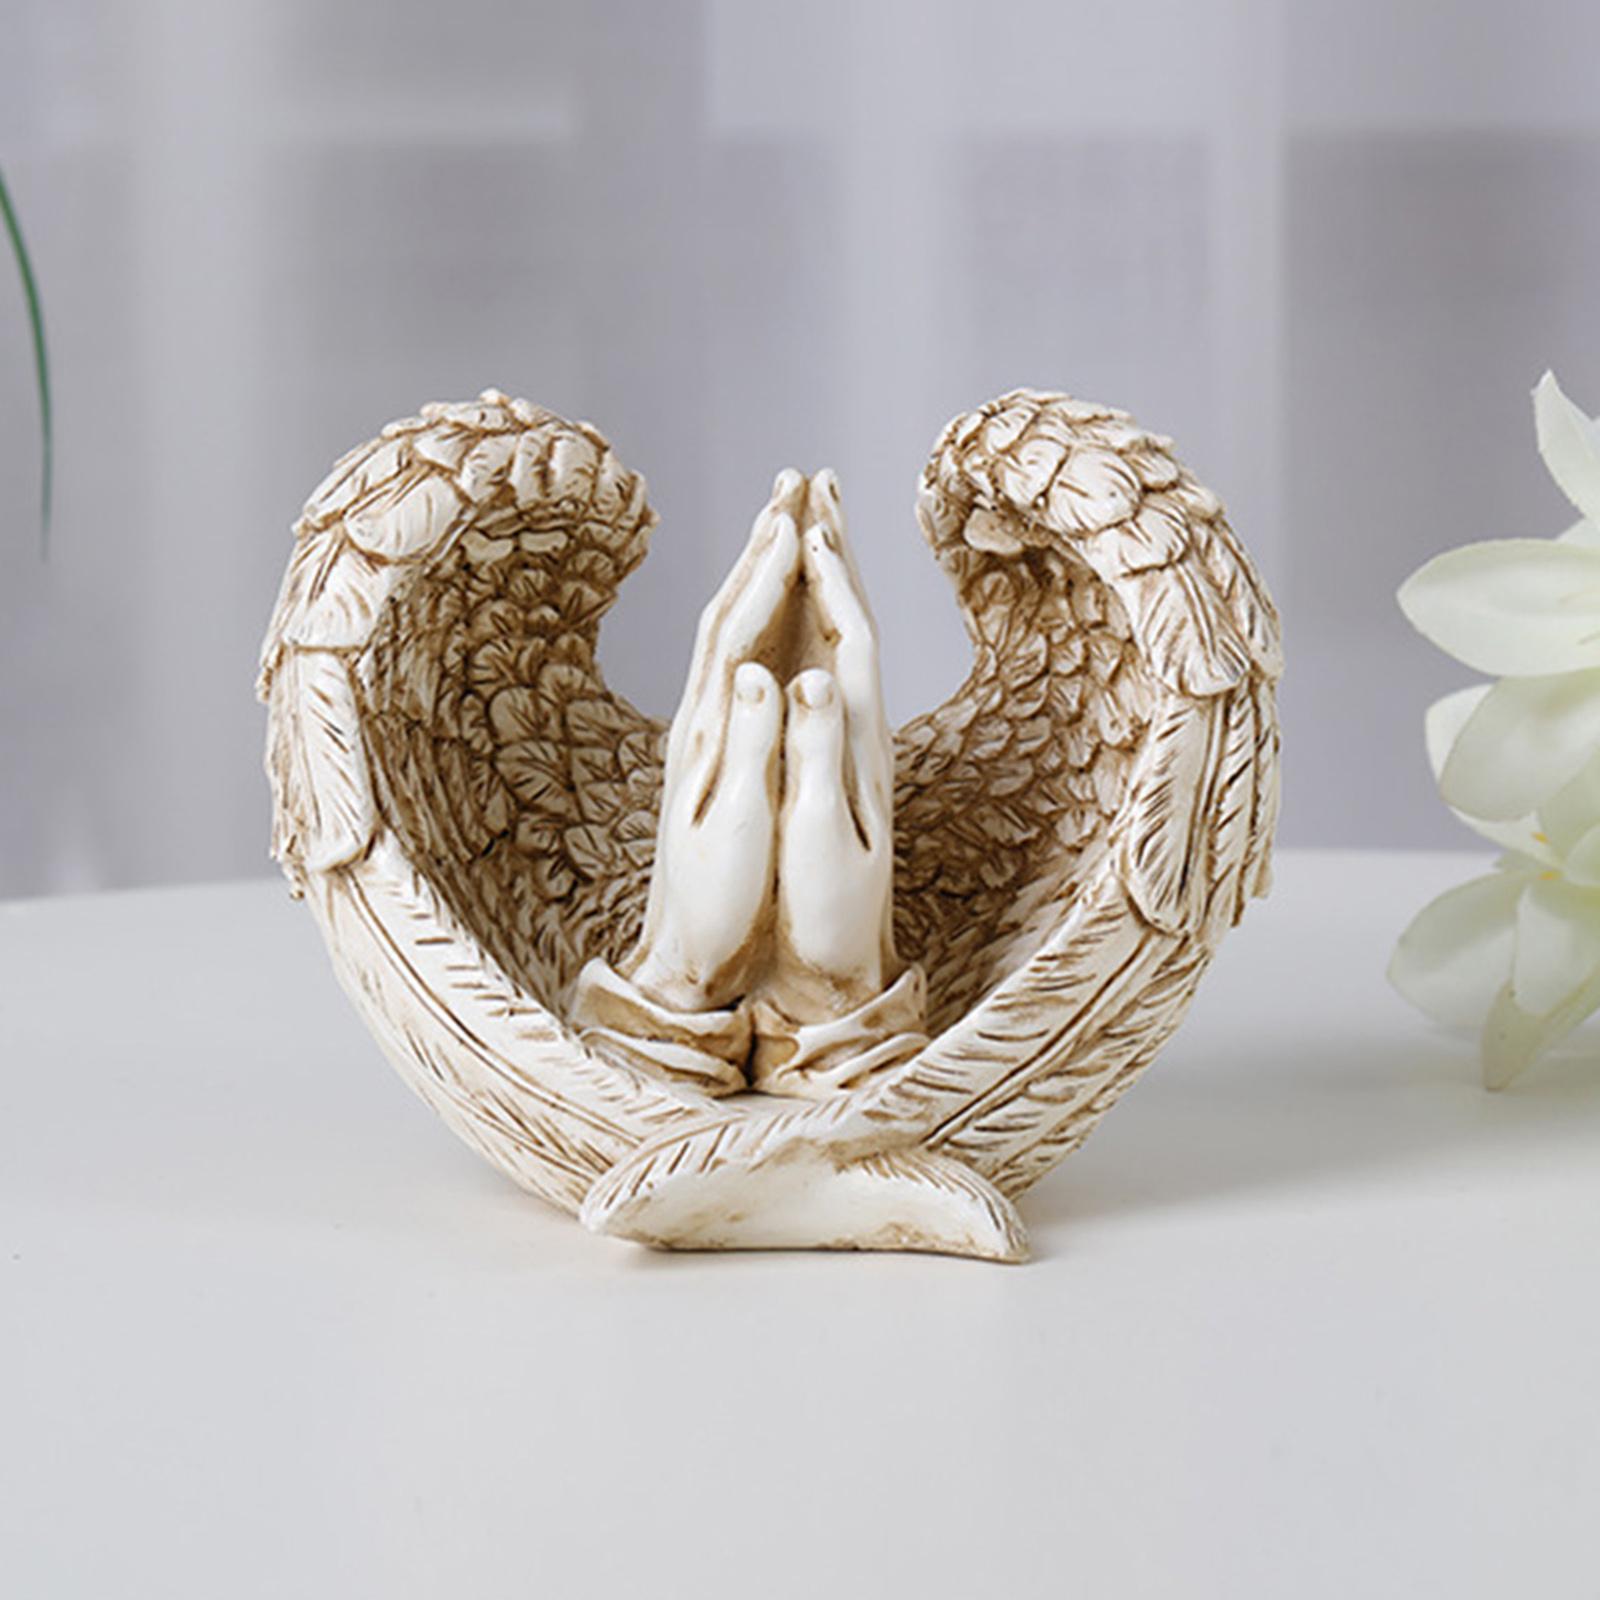 Angel Wings Statue with Pray Hands 3D Art Figurines Indoor Office Decor